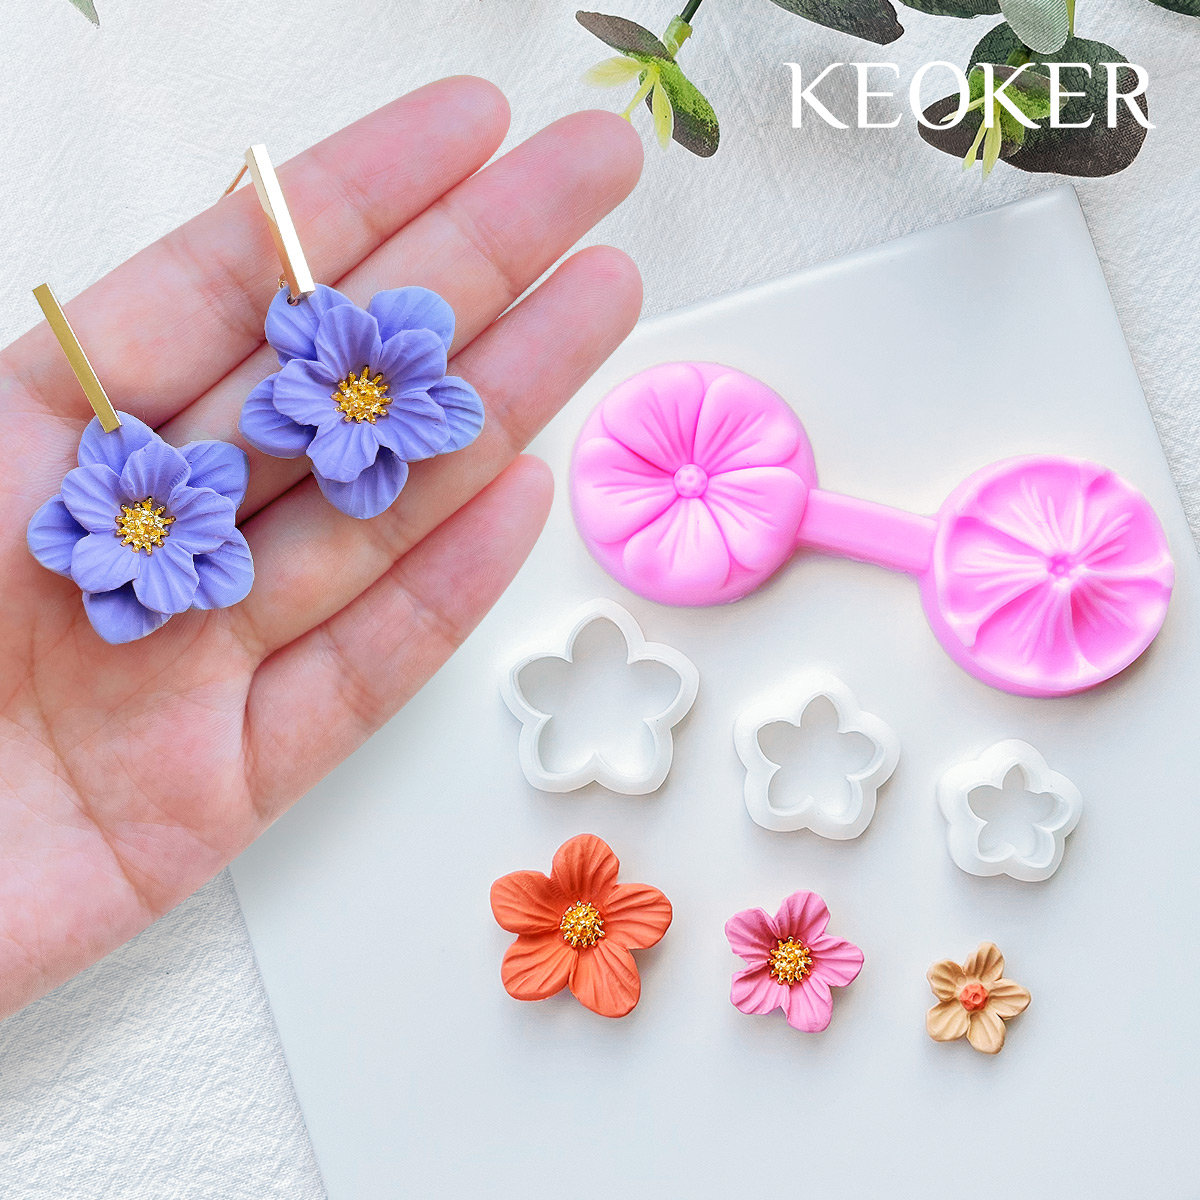 KEOKER Flower Polymer Clay Molds(6 Pcs)